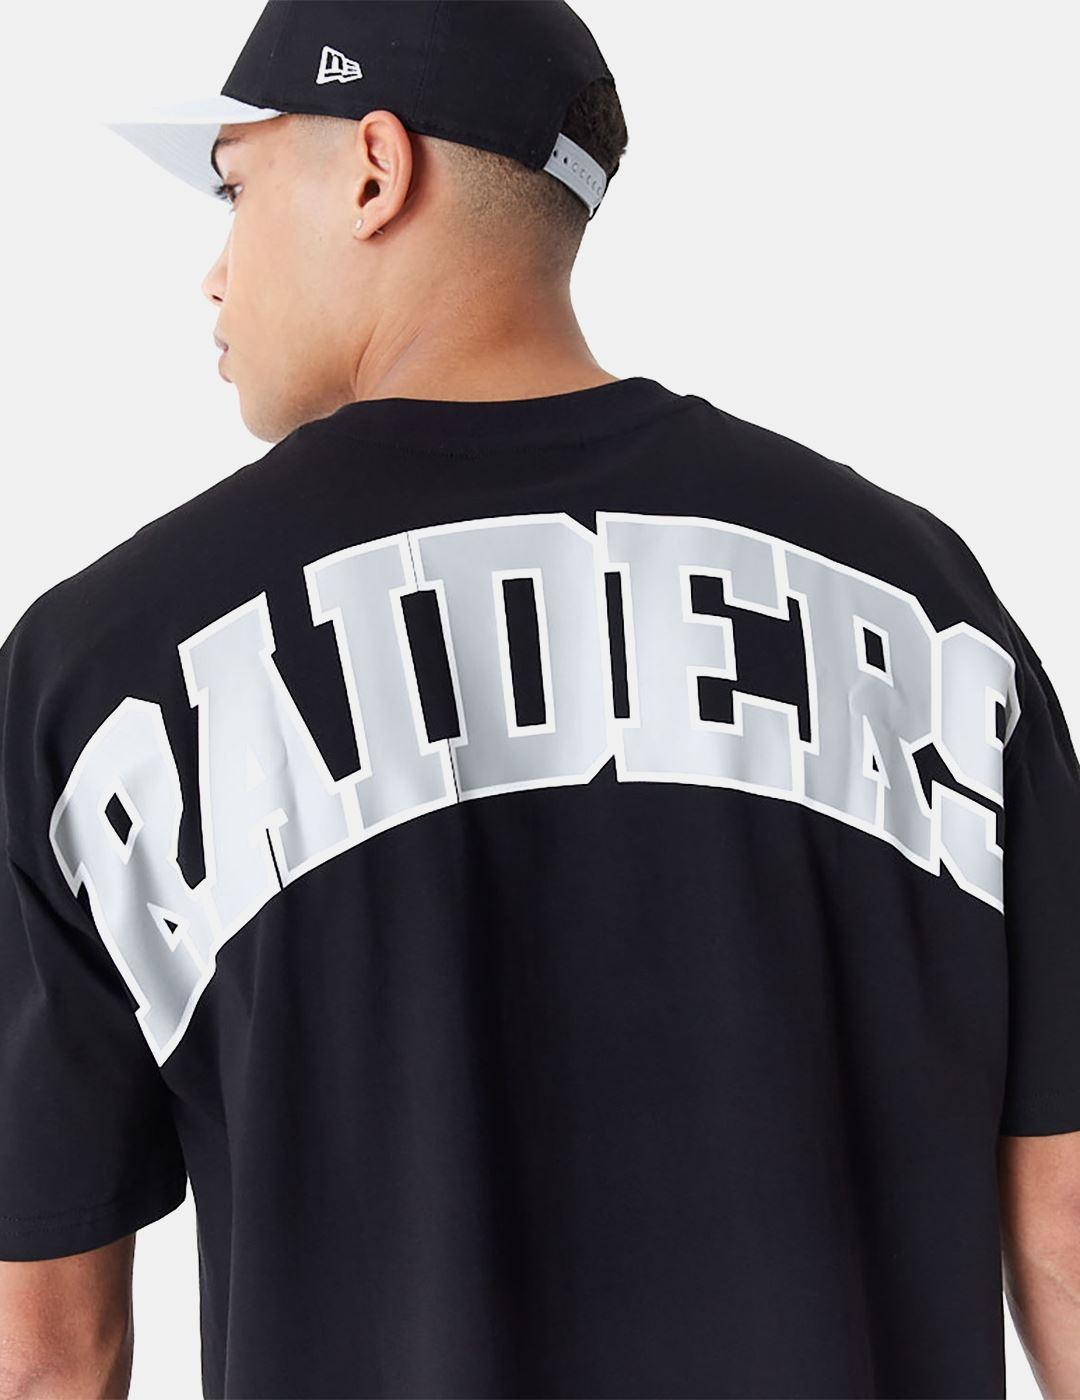 Camiseta New Era Nfl Drop Shoulder Las Vegas Raiders